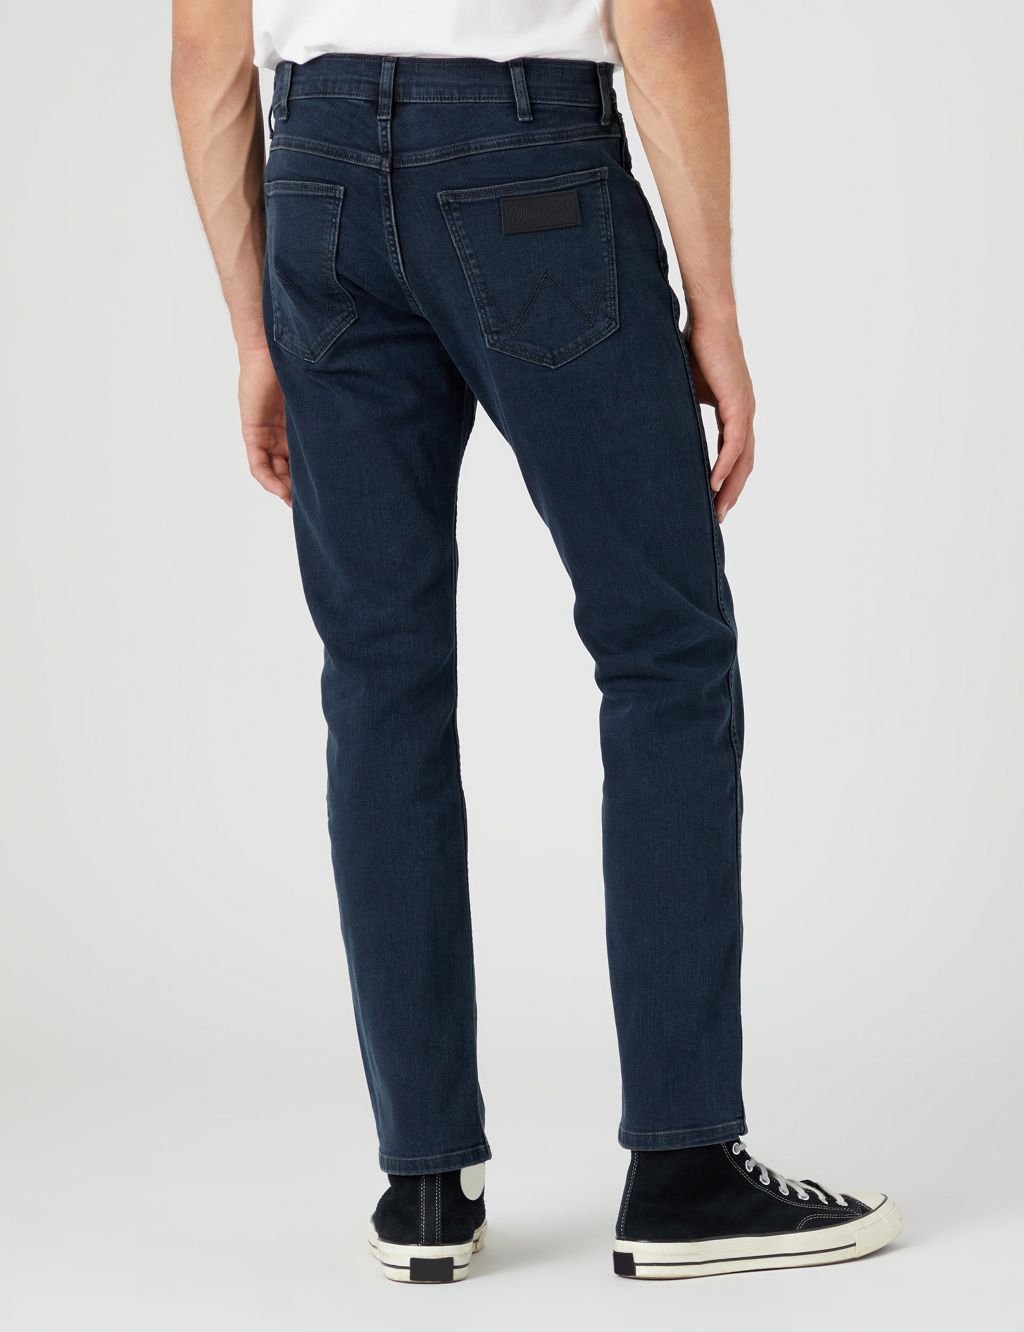 Greensboro Regular Straight Fit Jeans image 3